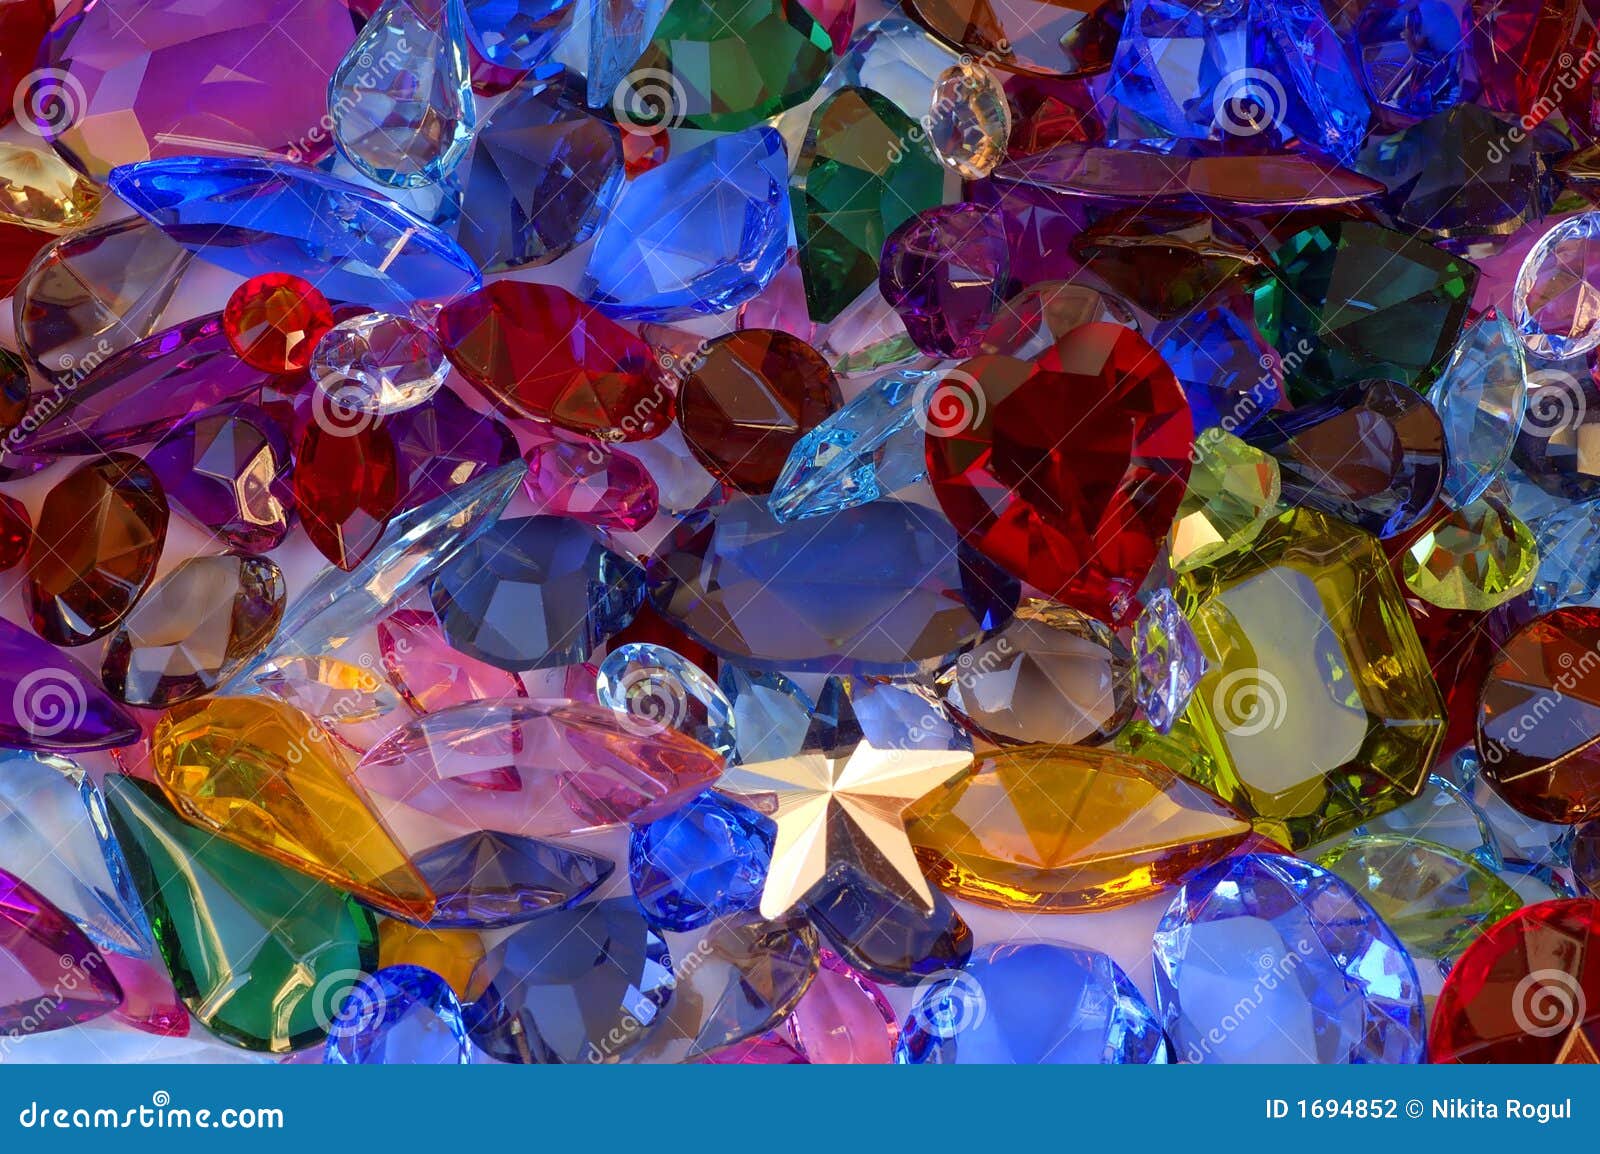 pile of gems